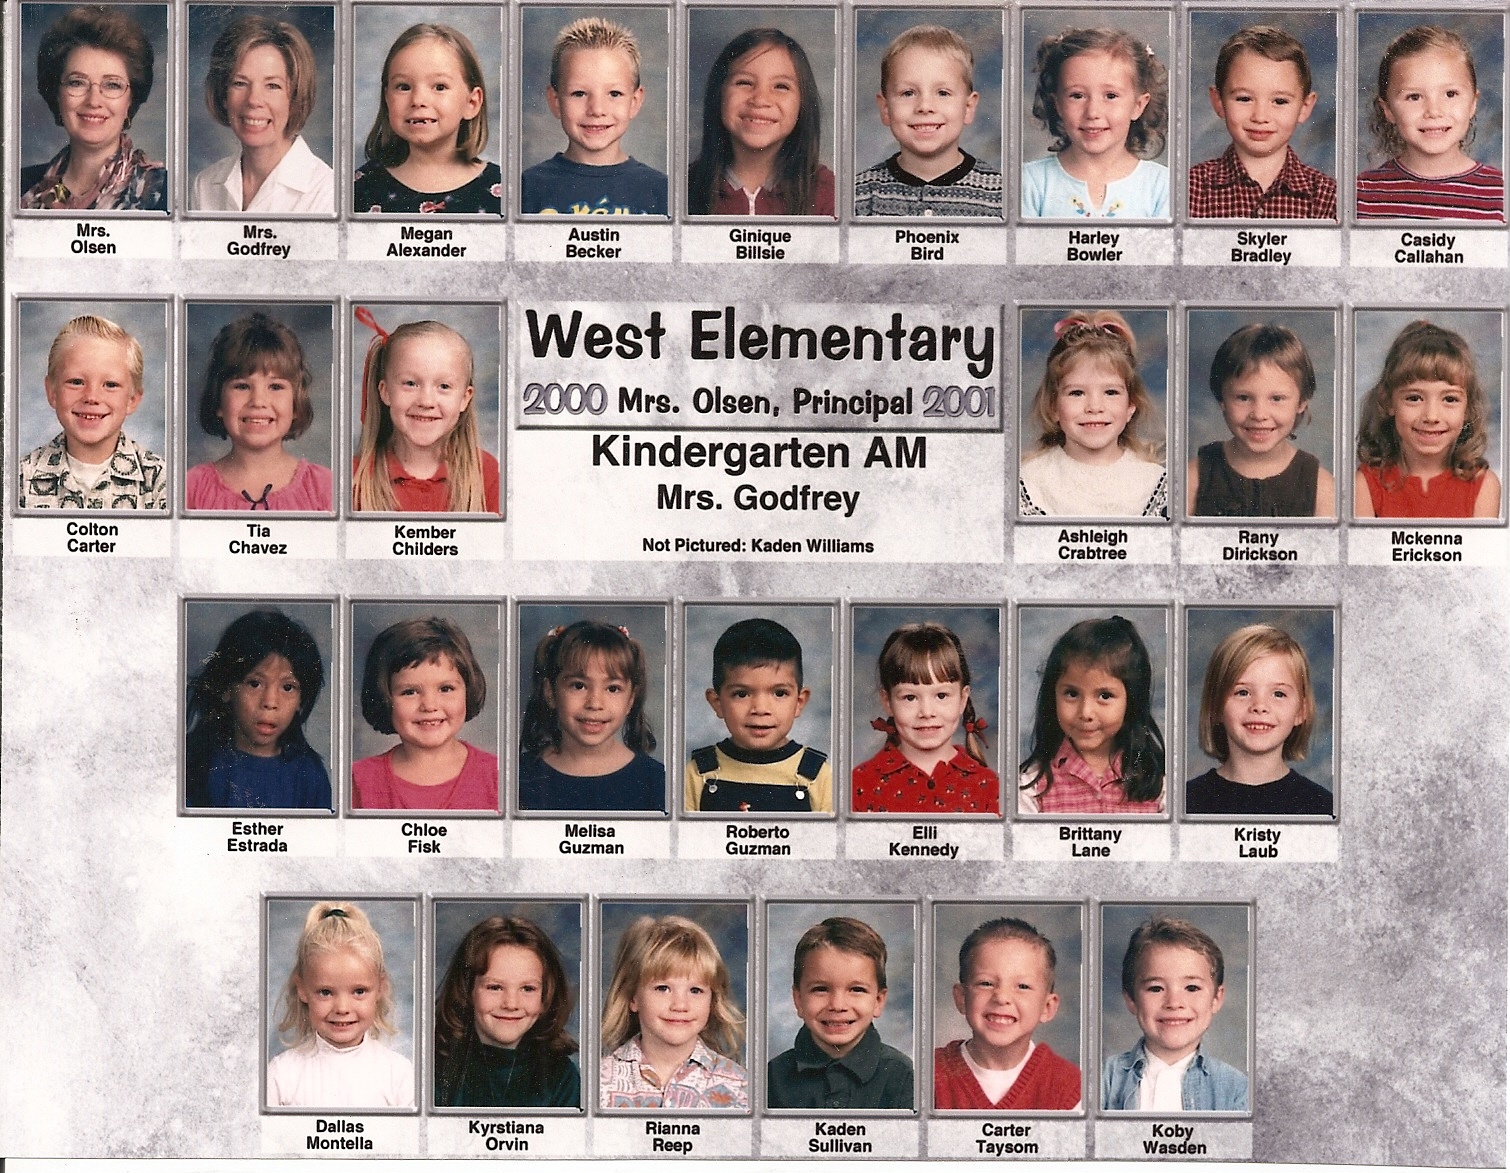 Mrs. Lynne Godfrey's 2000-2001 am kindergarten class at West Elementary School